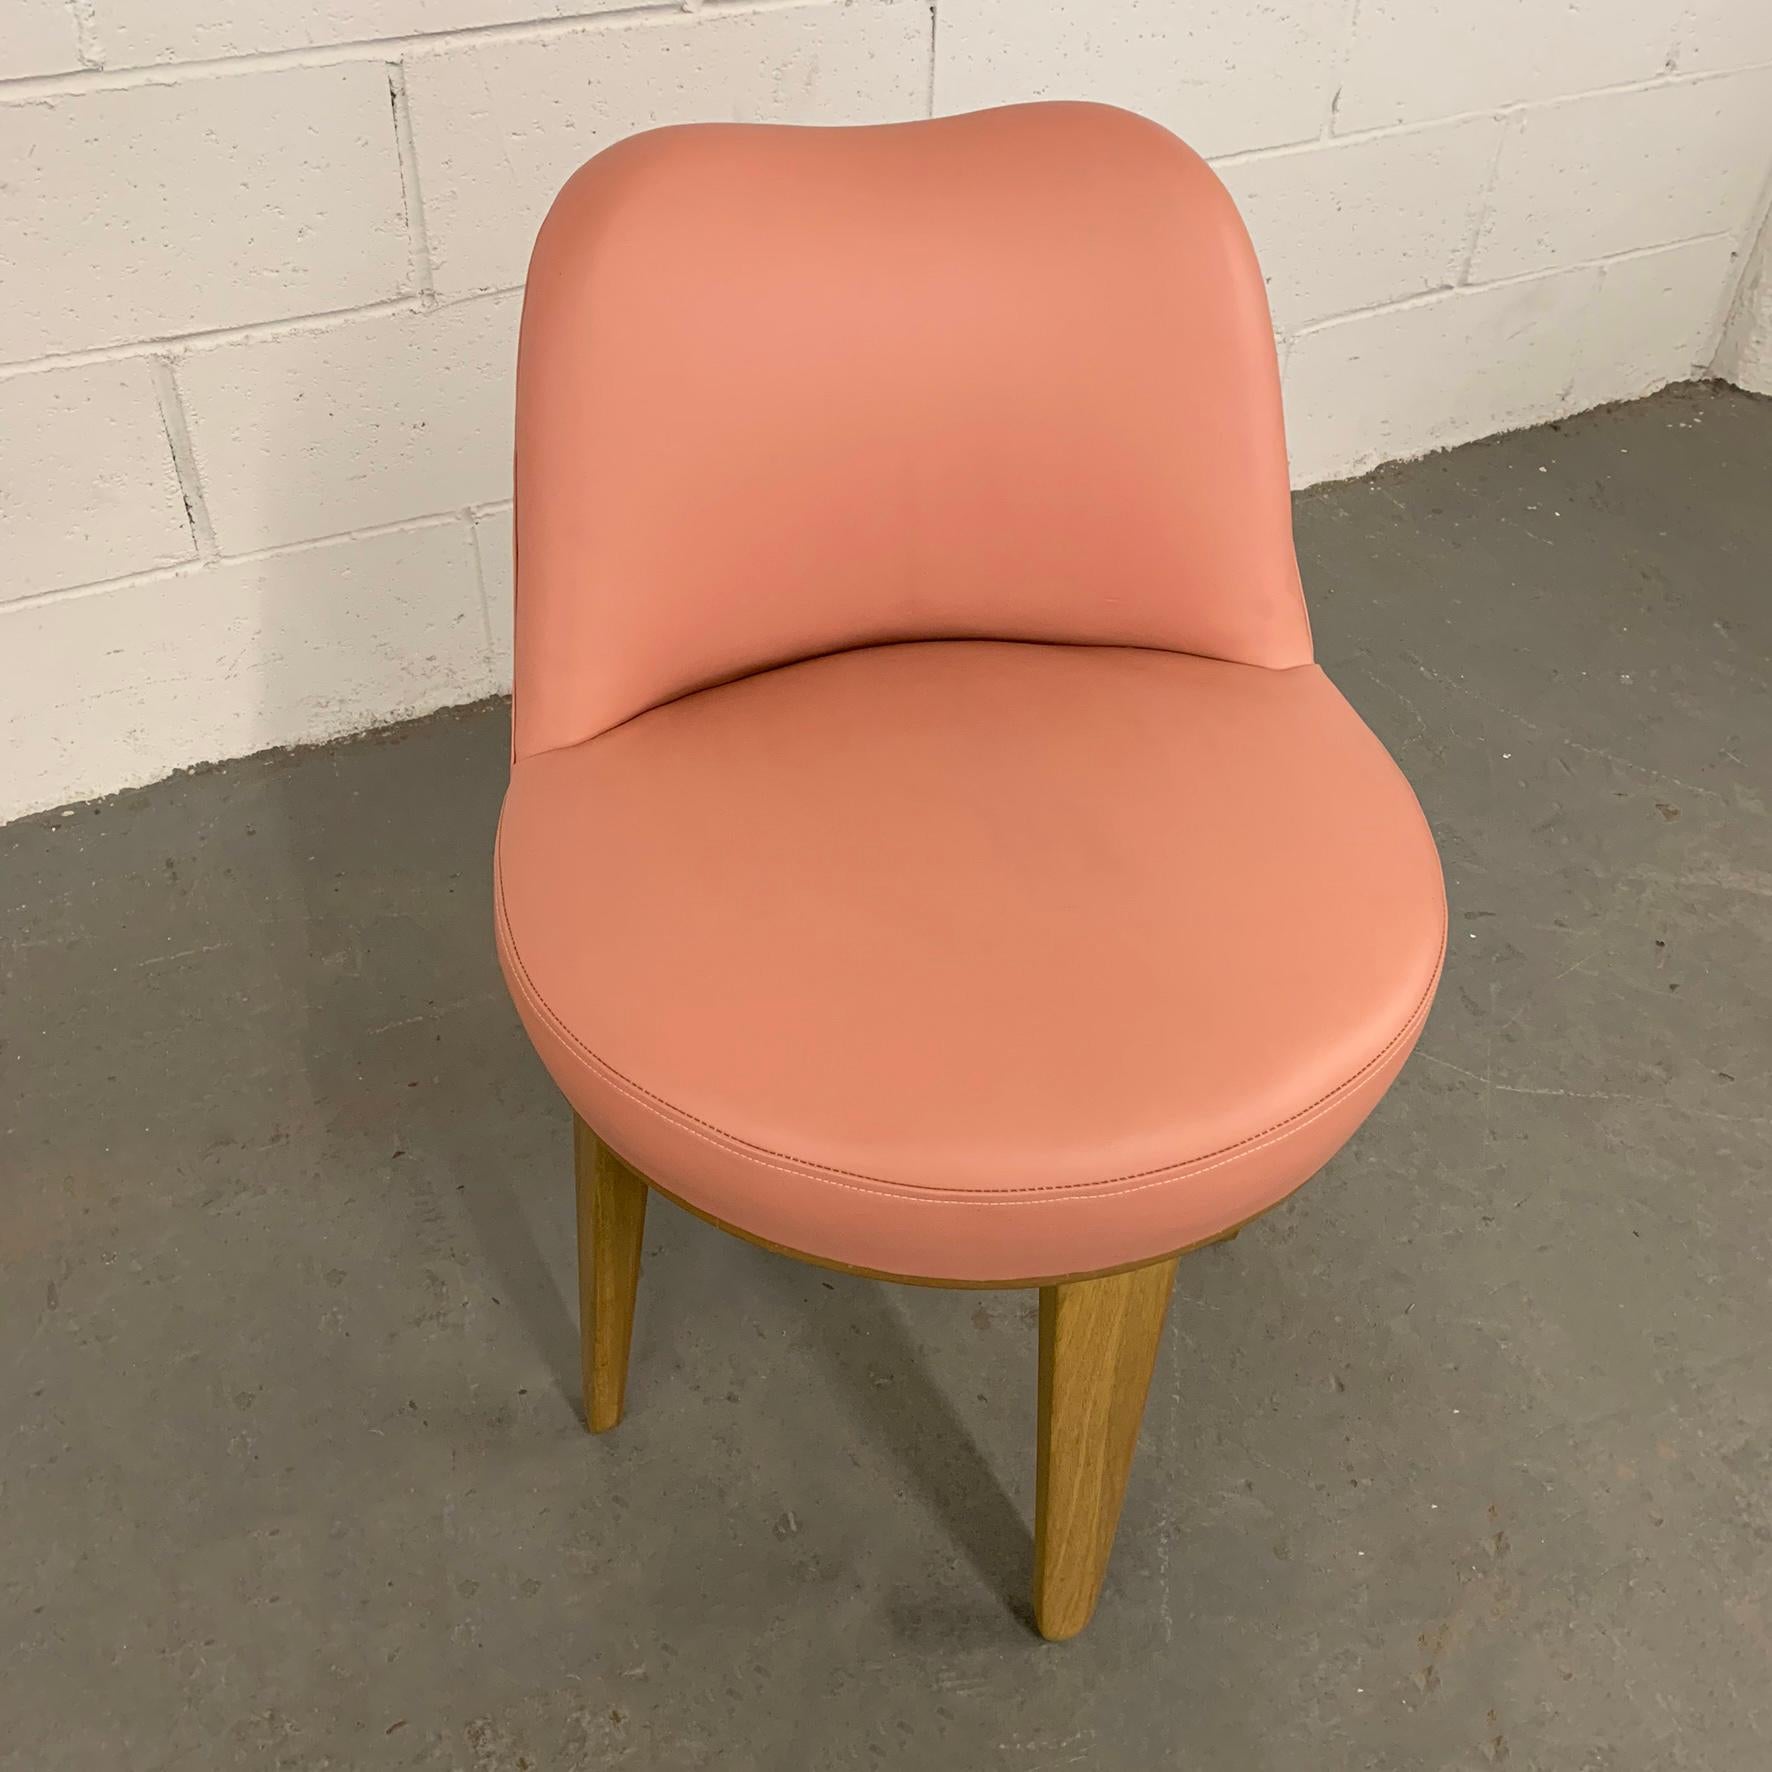 Mahogany Edward Wormley for Dunbar Leather Swivel Vanity Chair